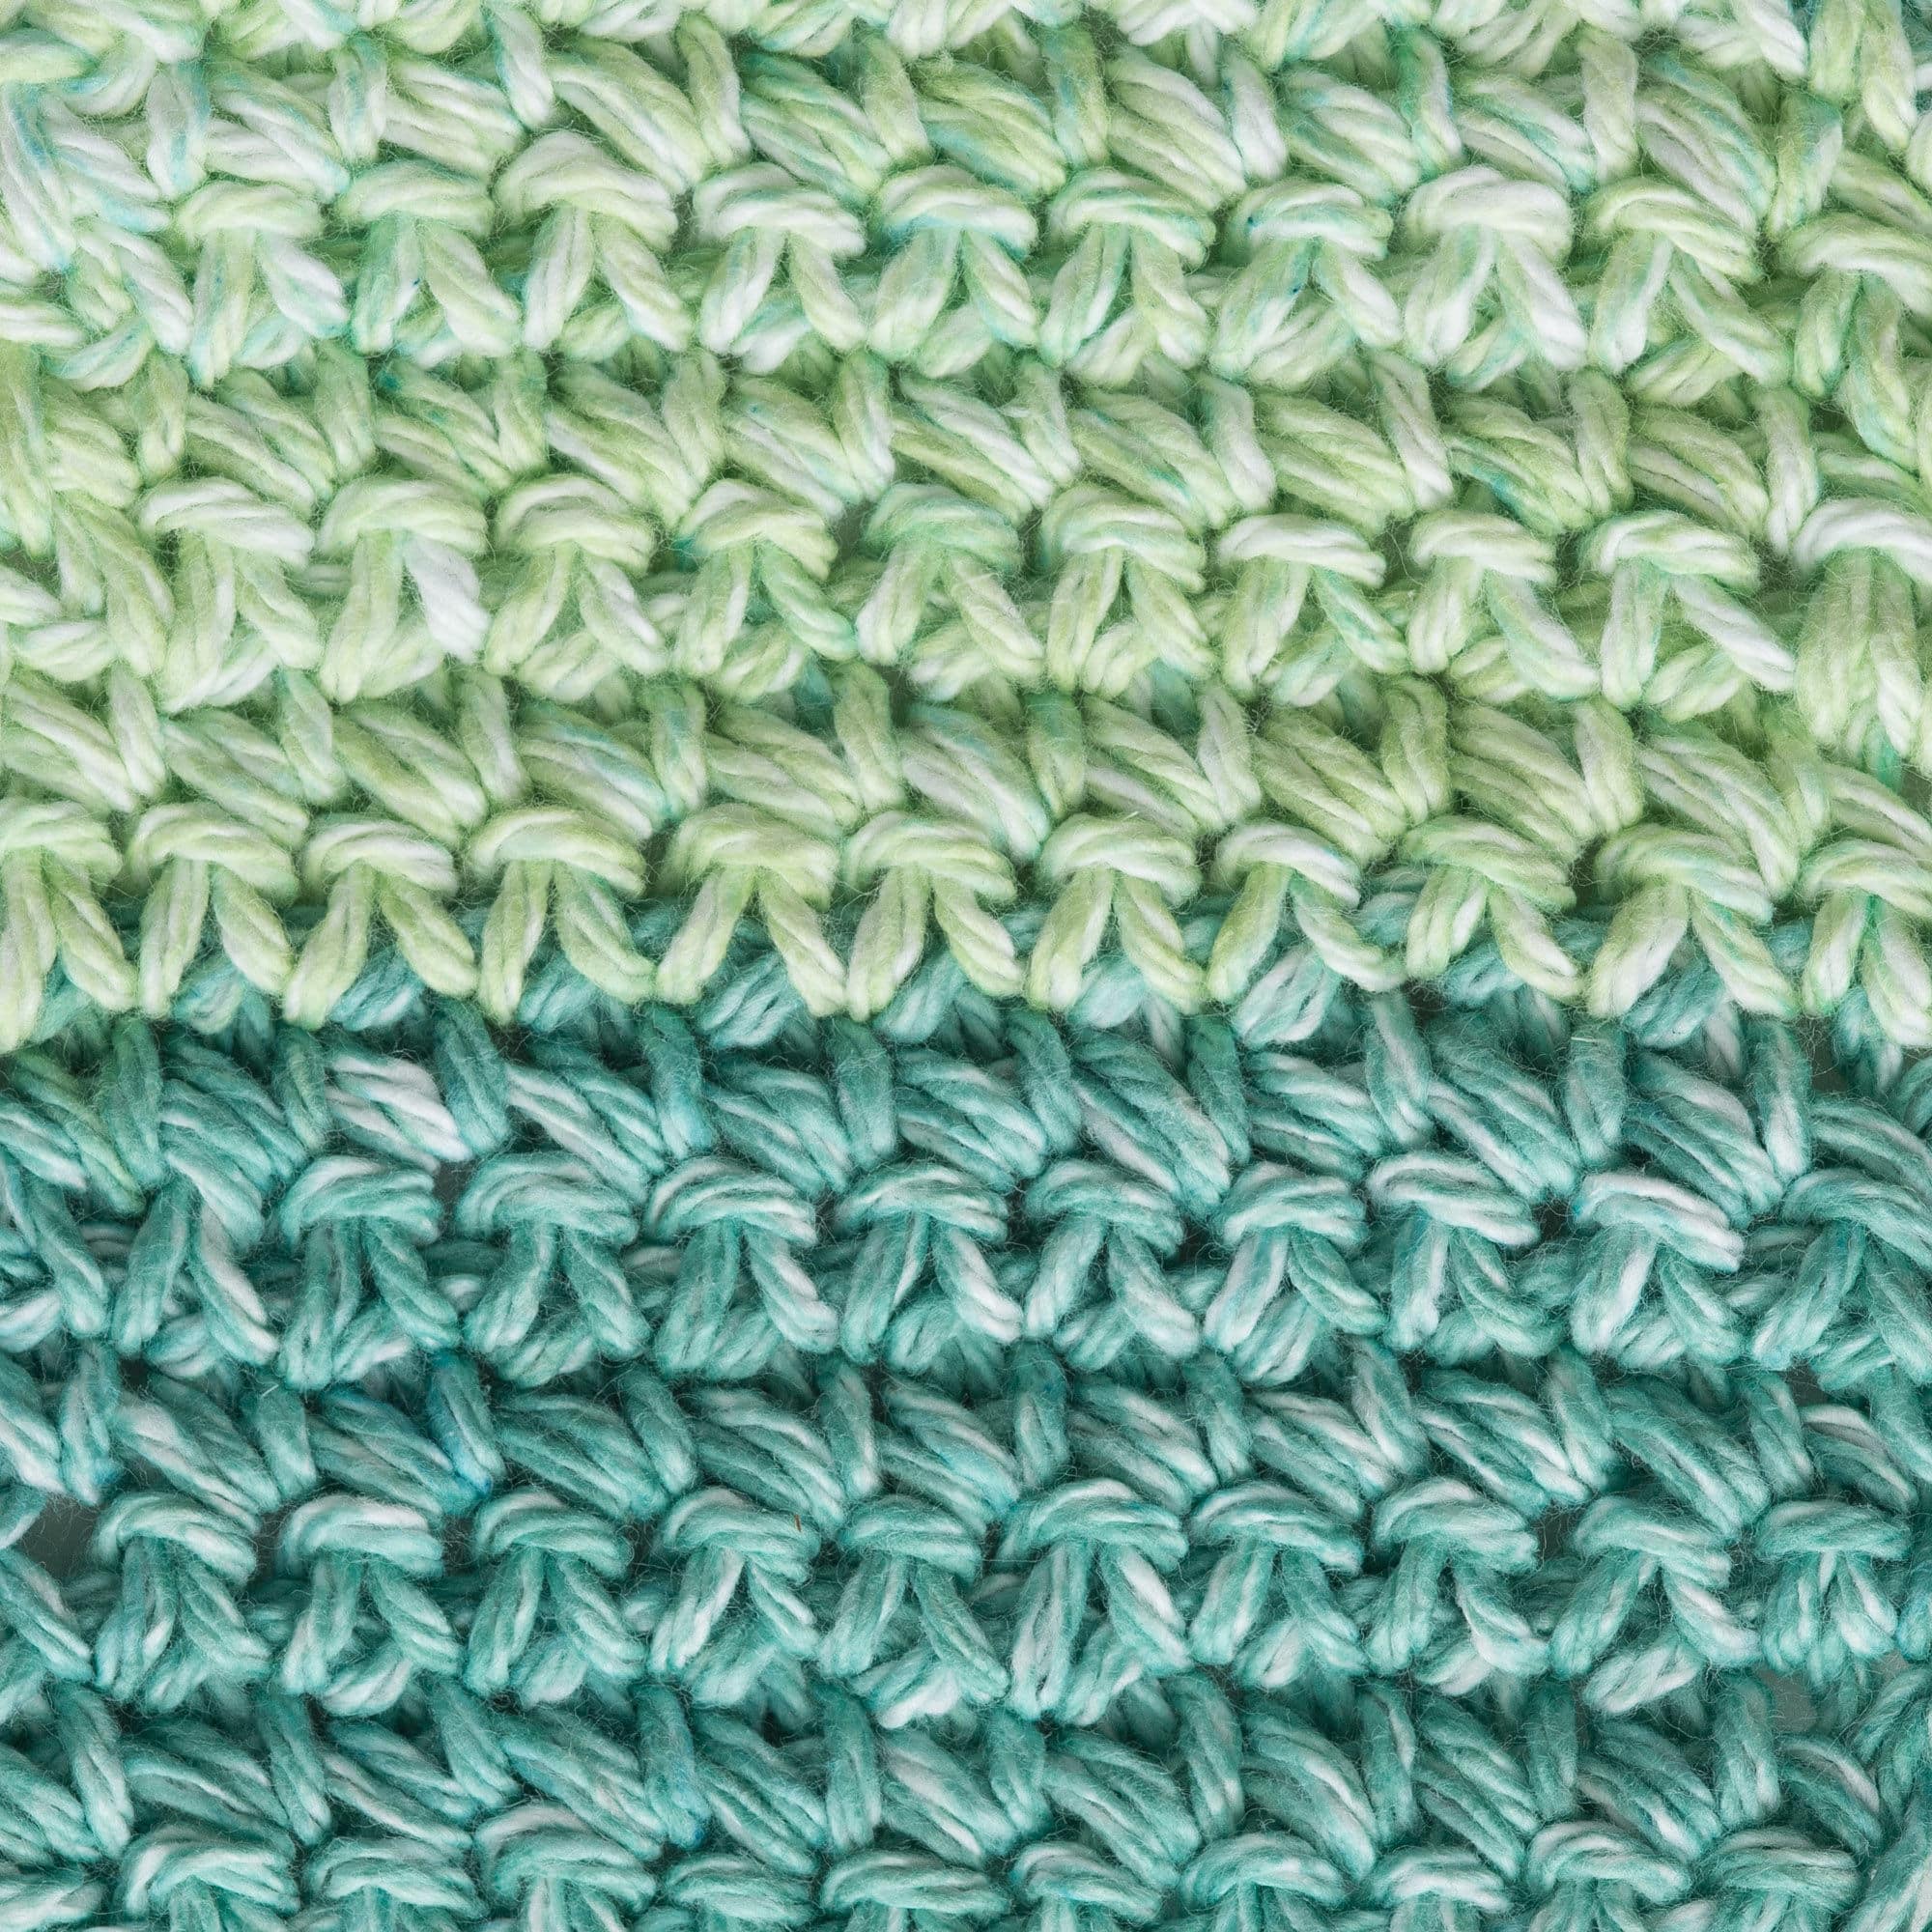 Lily Sugar'N Cream Country Stripes Yarn - 6 Pack of 57g/2oz - Cotton - 4  Medium (Worsted) - 95 Yards - Knitting/Crochet